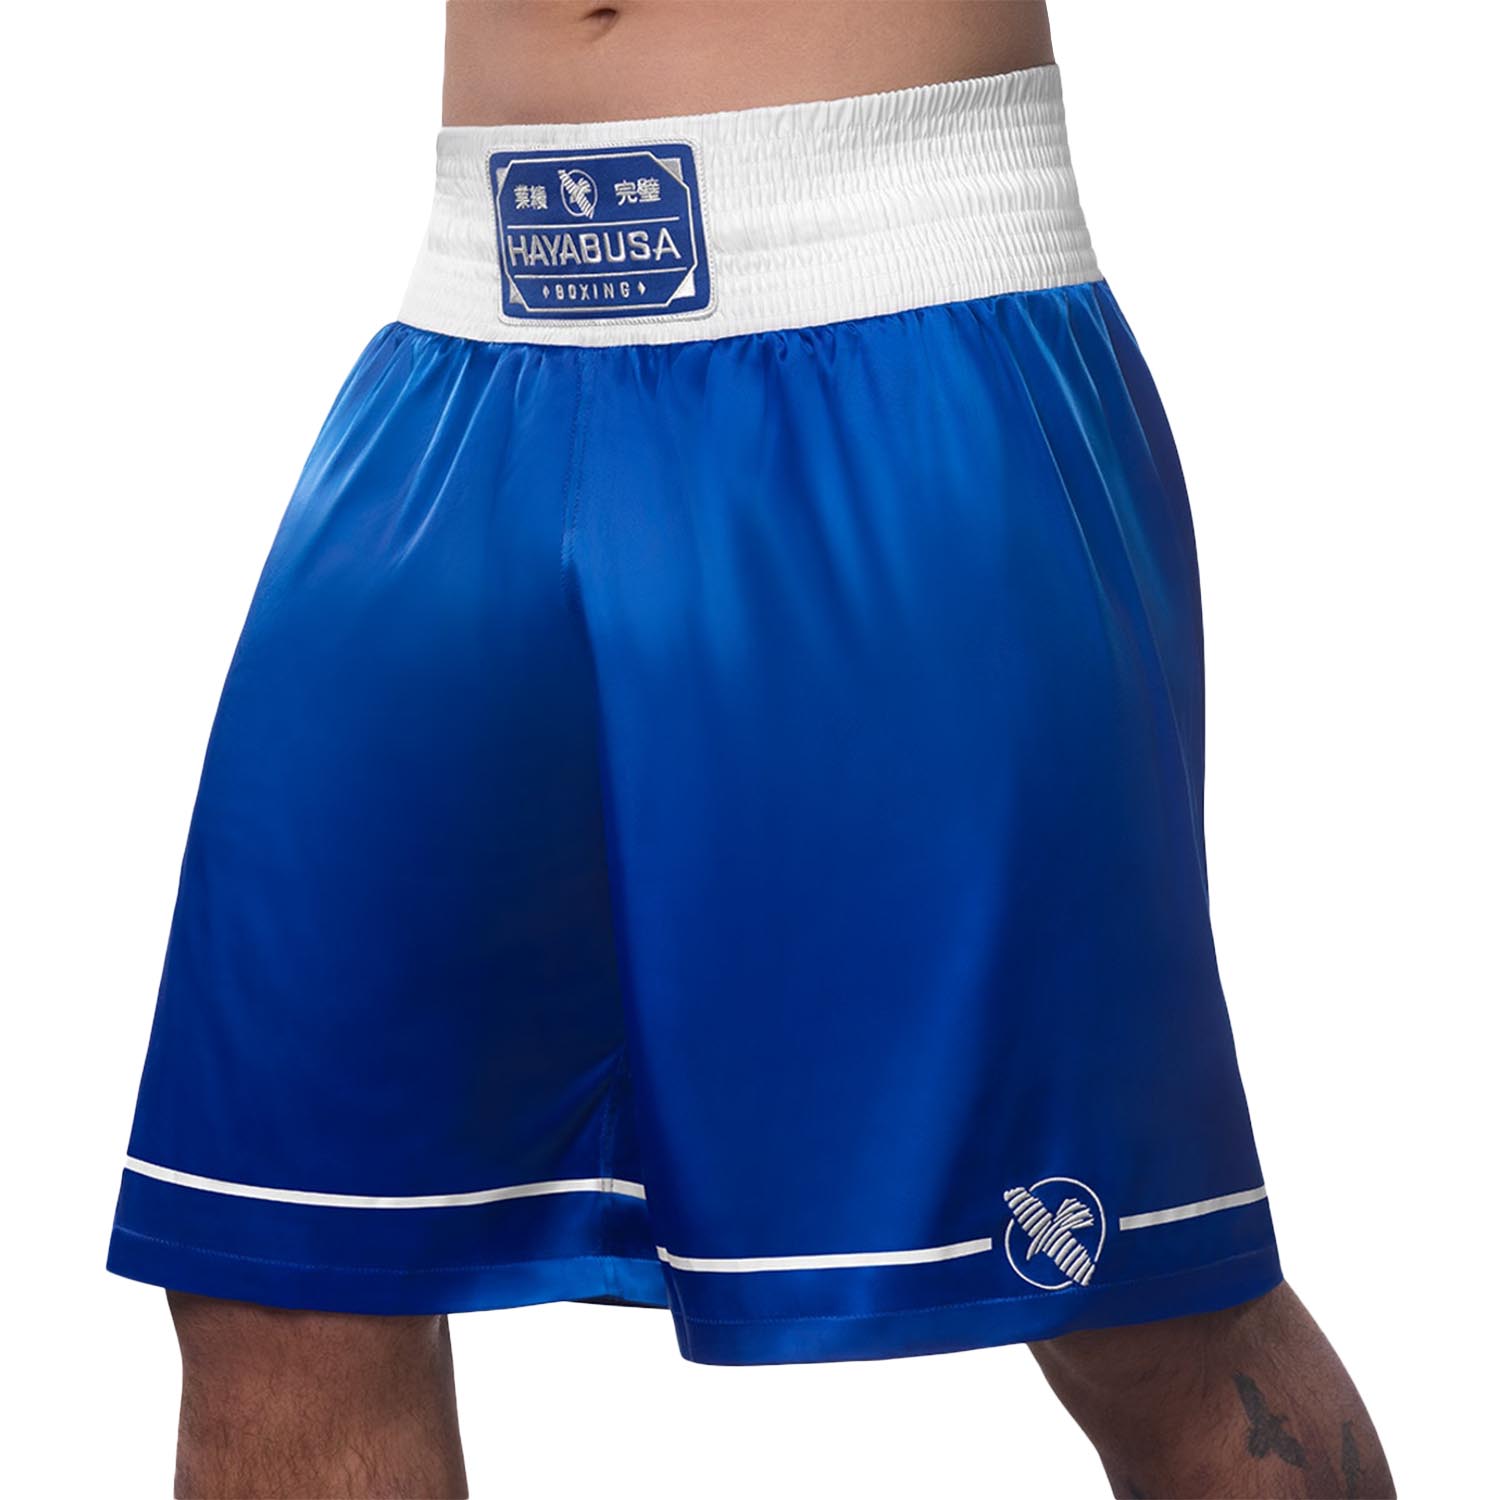 Hayabusa Boxing Shorts, Pro, blue, S